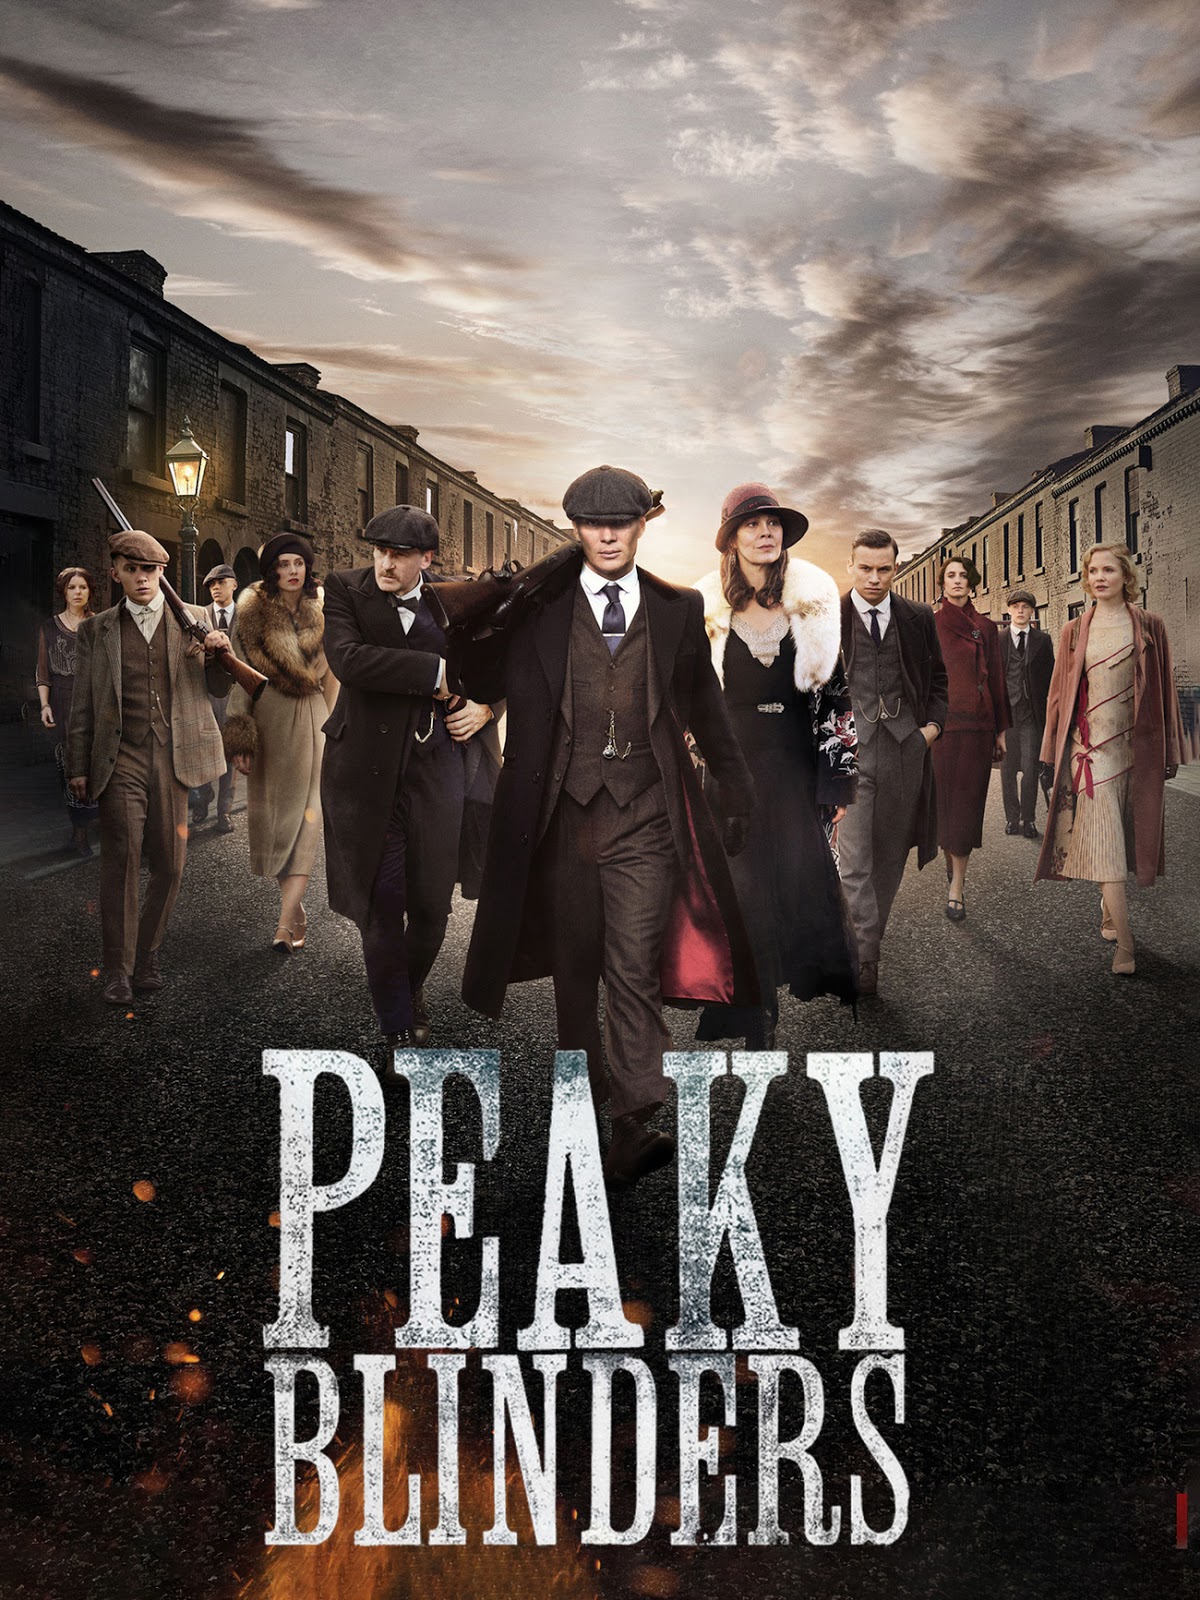 peaky blinders season 1 subtitles english download